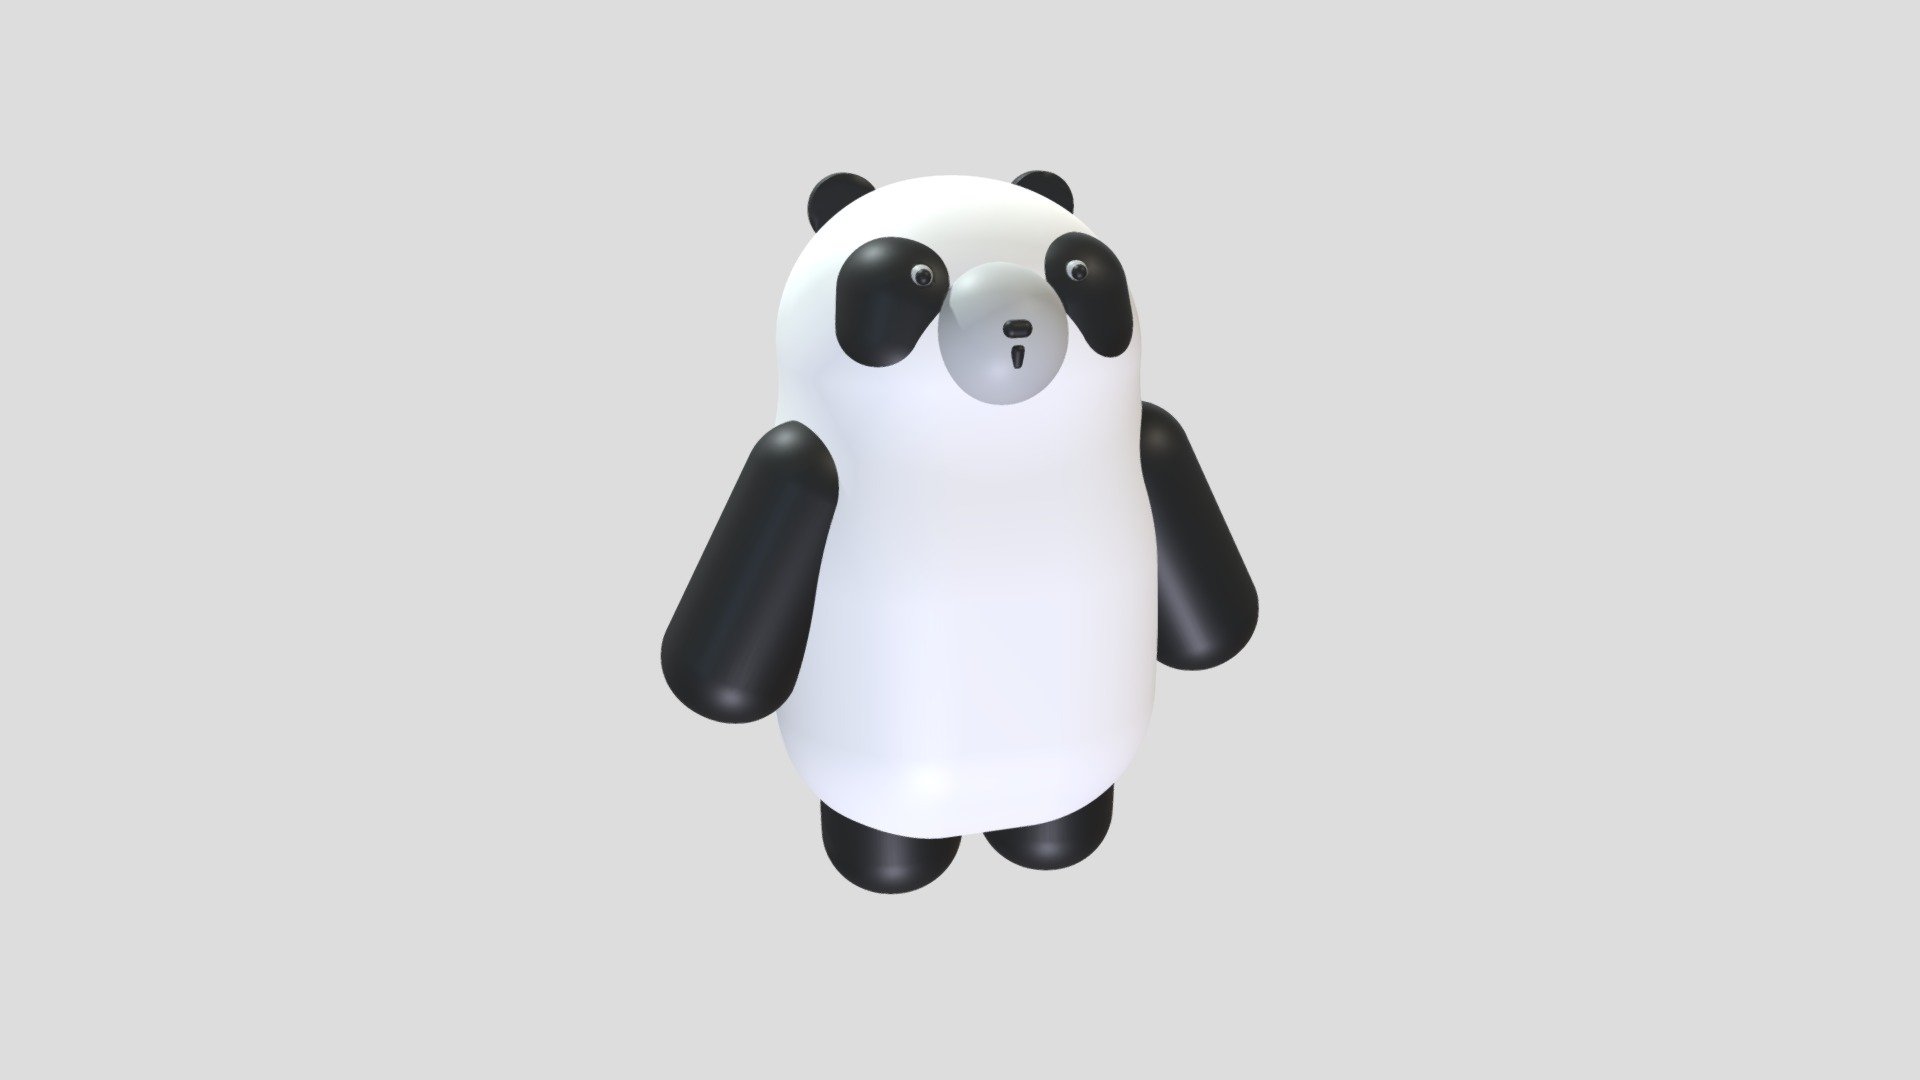 Lovely Panda 3D cute panda doll model 2022,black and white color, gltb tyle file,panda doll - Panda 3D model|cute panda doll model 2022 new - Download Free 3D model by Spark AR (@howvfx.david) 3d model